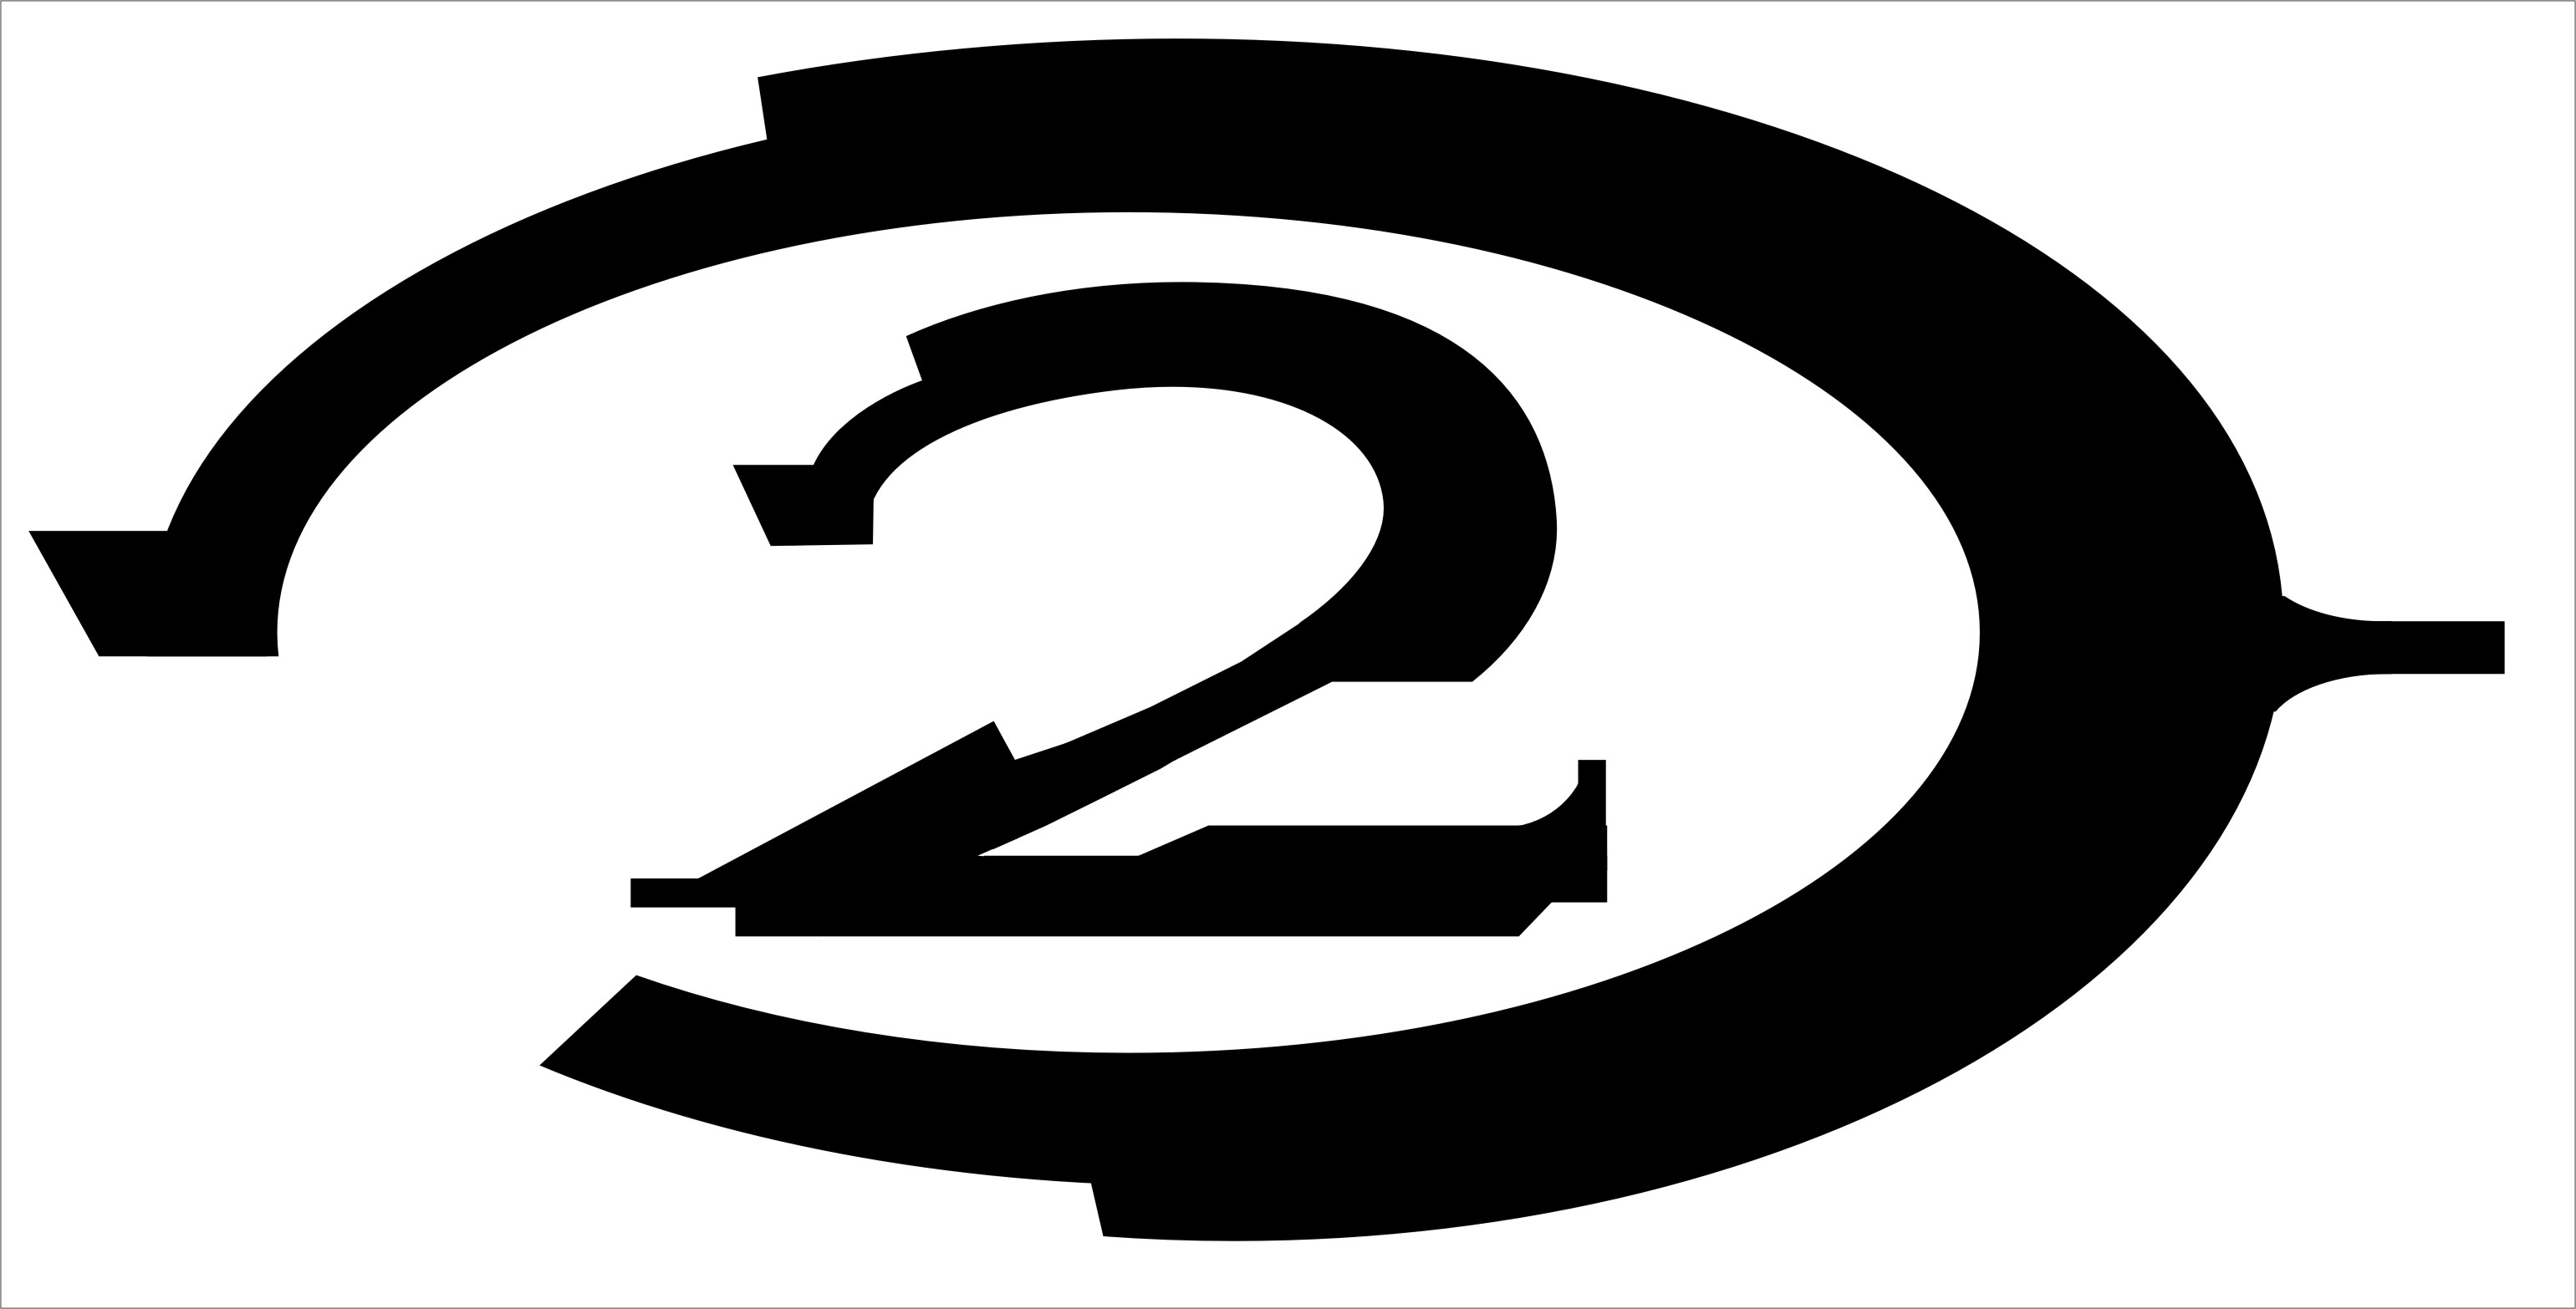 Very very very hi-res Halo 2 logo